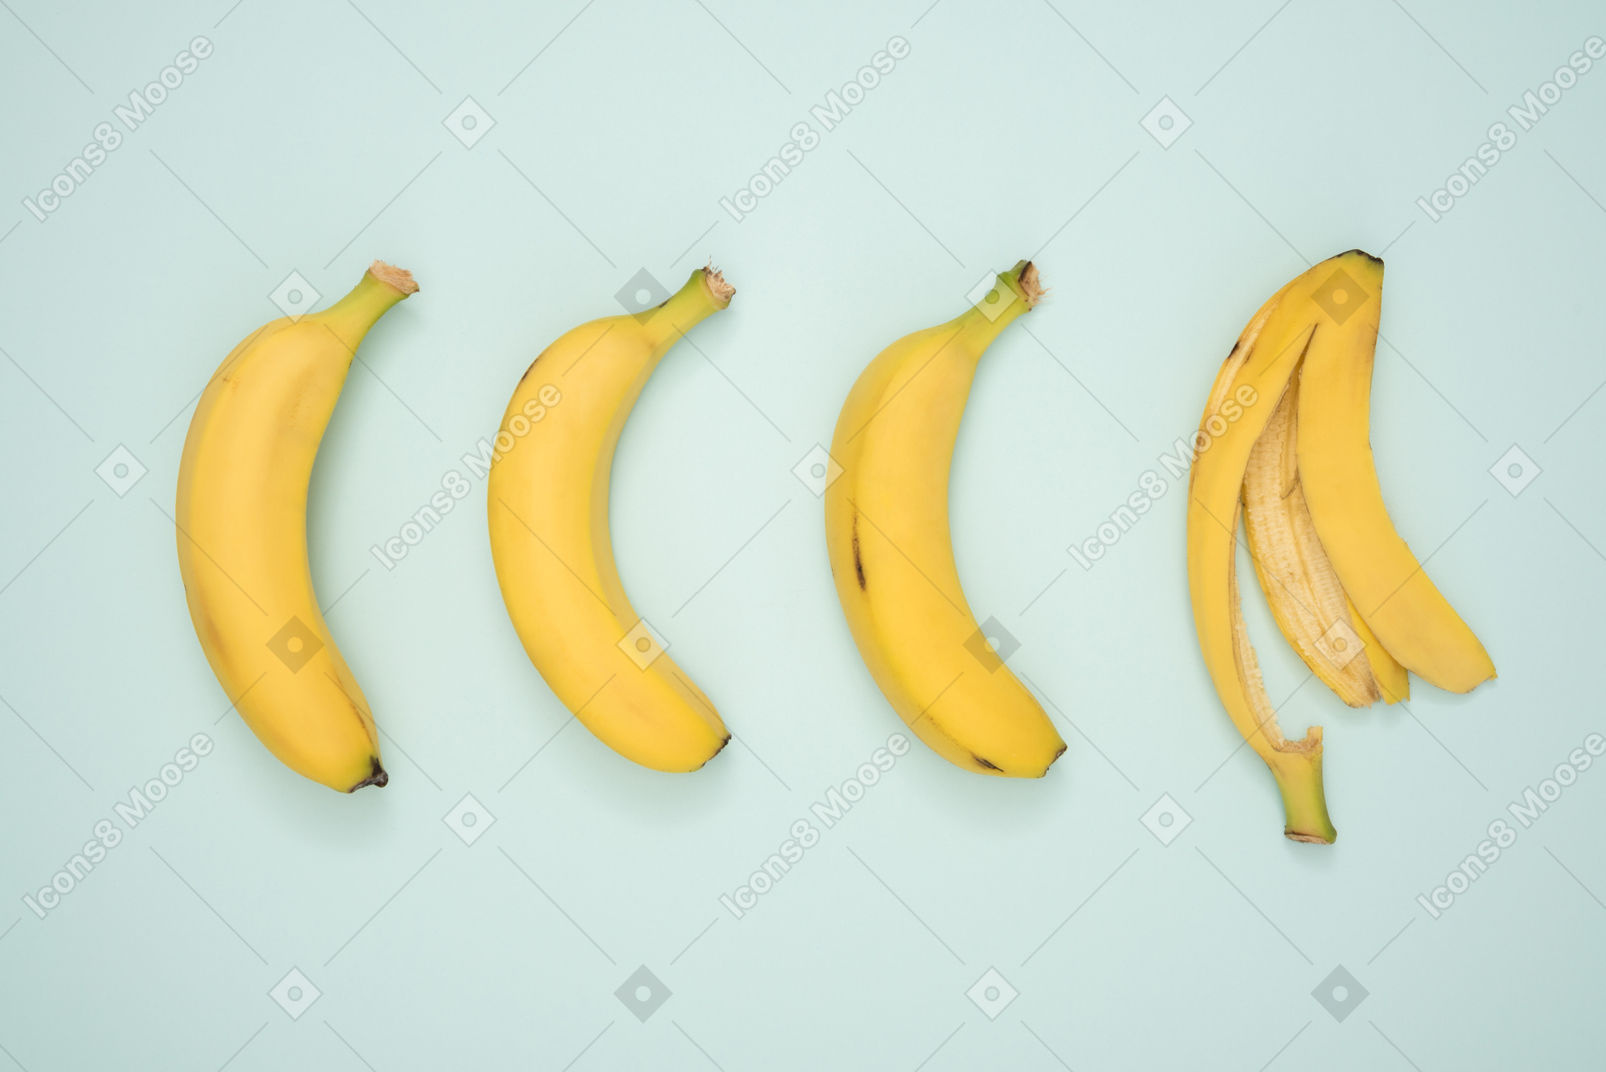 Going bananas